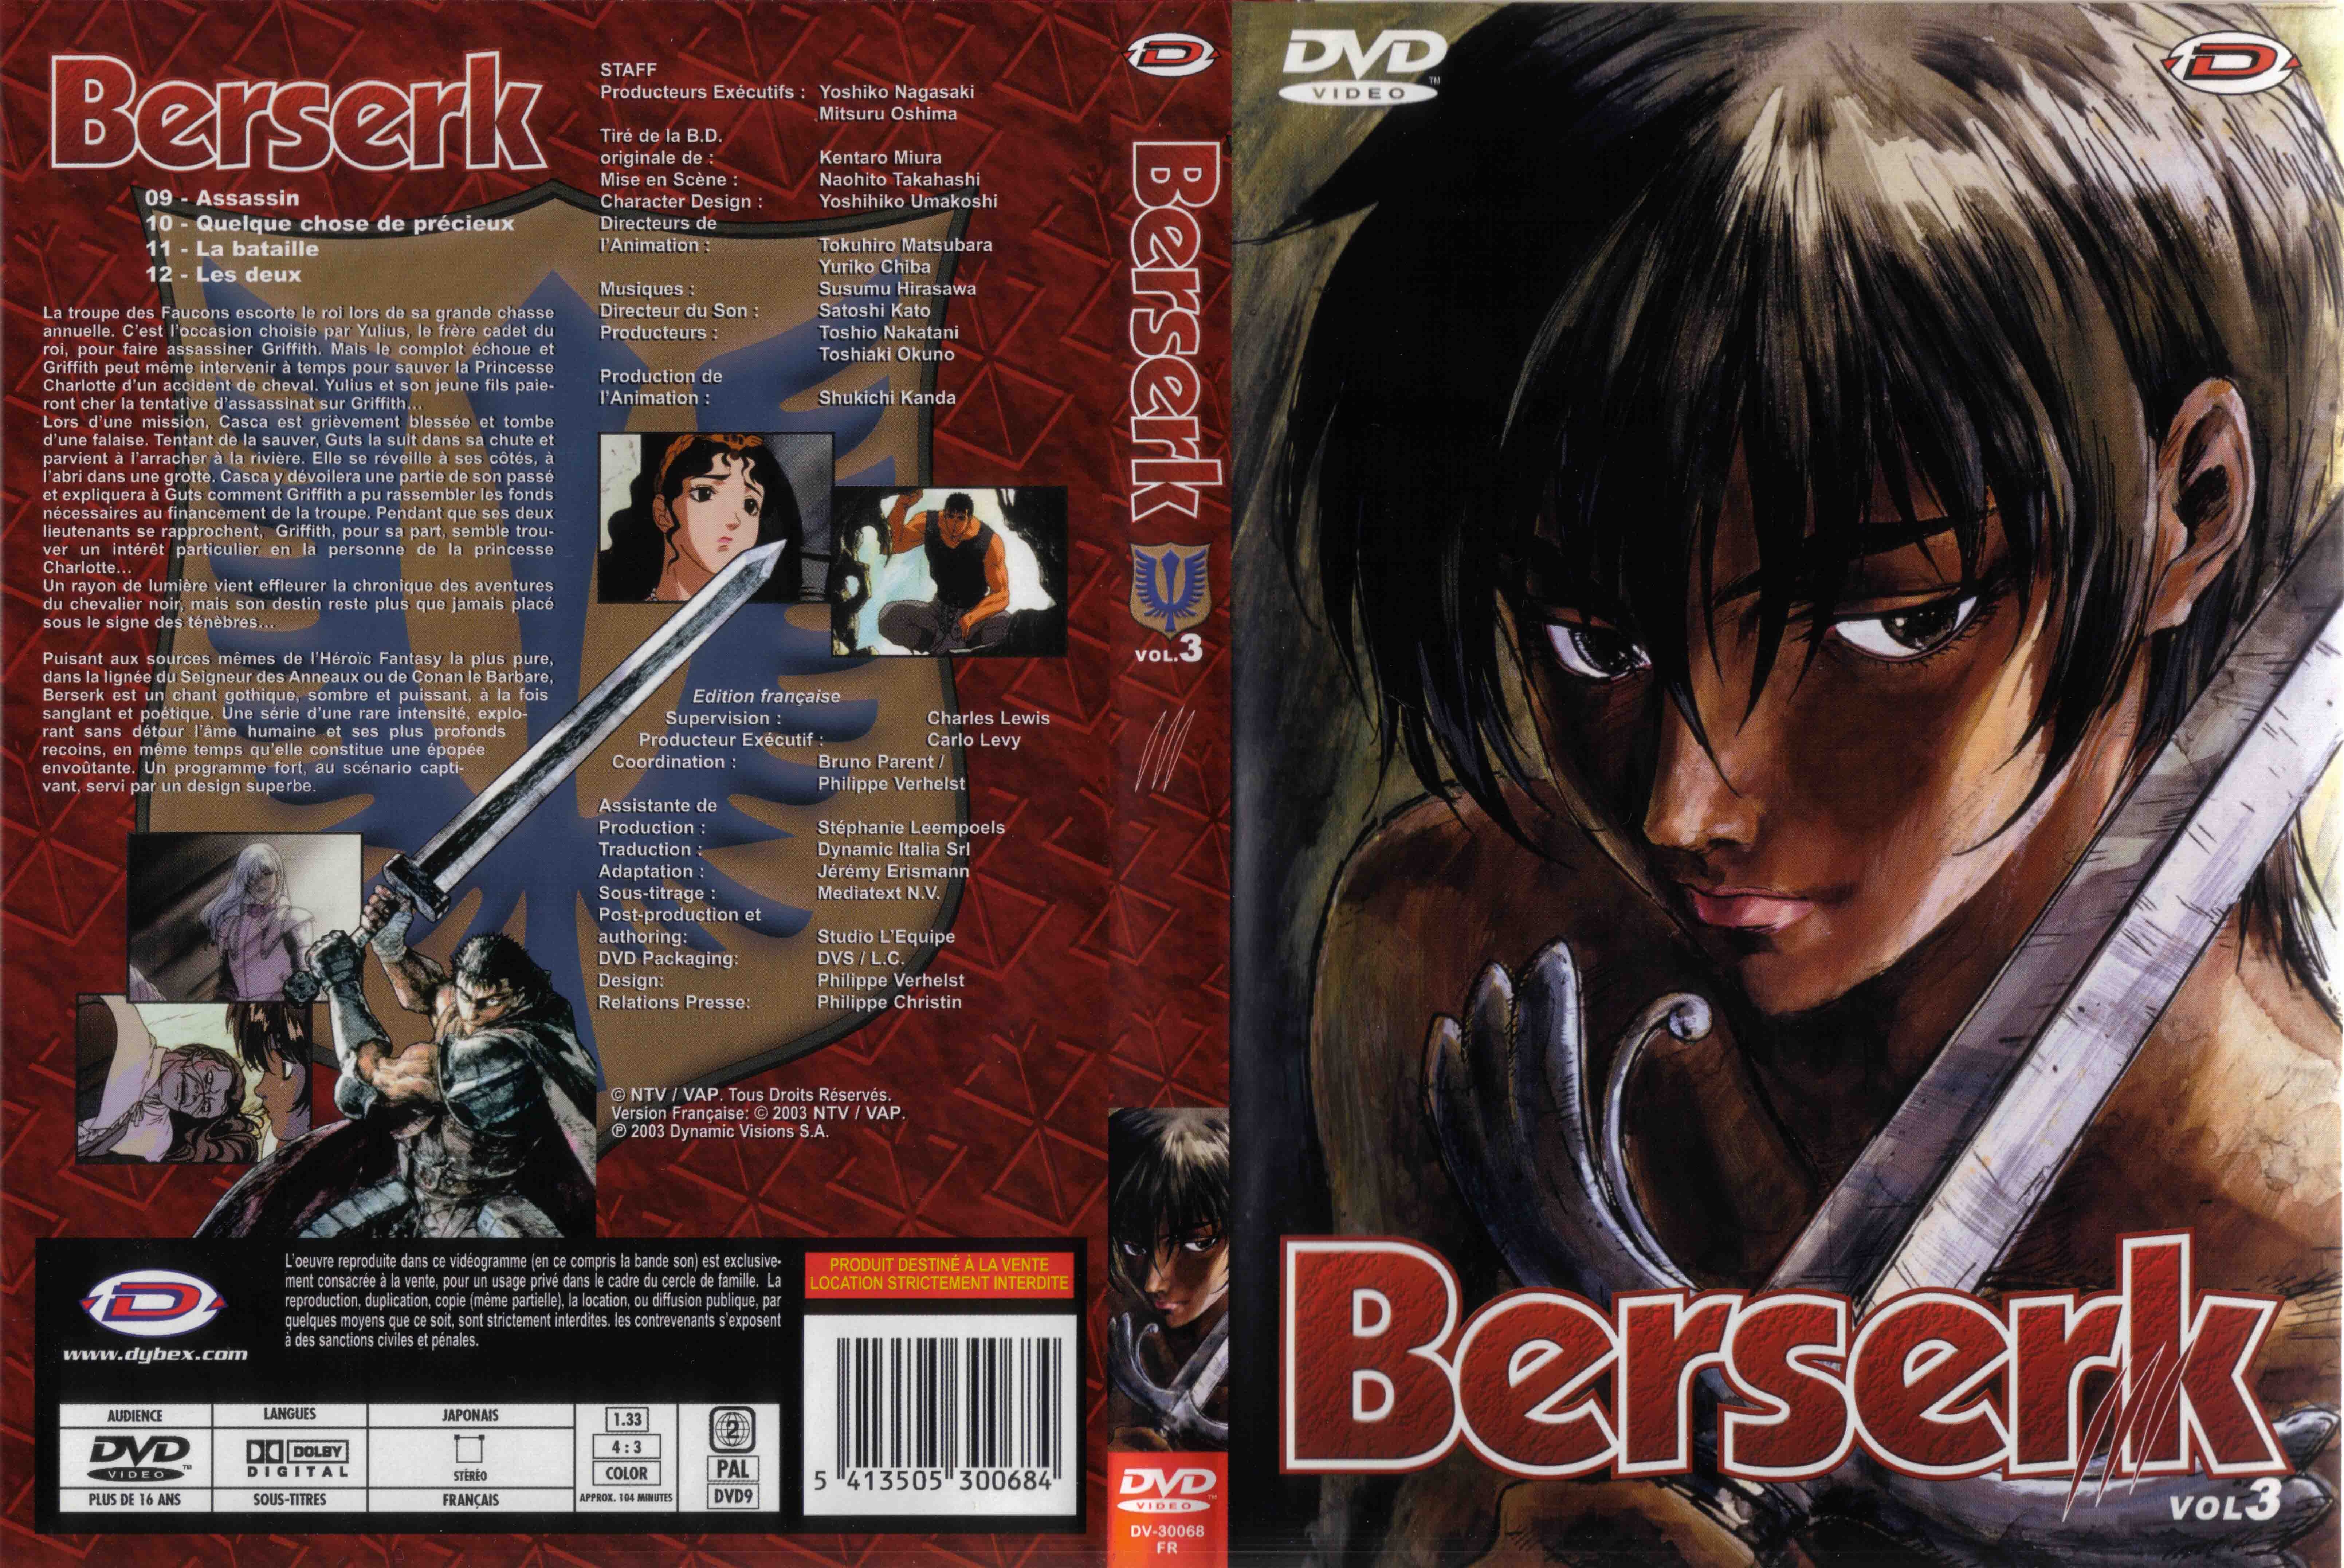 Jaquette DVD Berserk vol 3